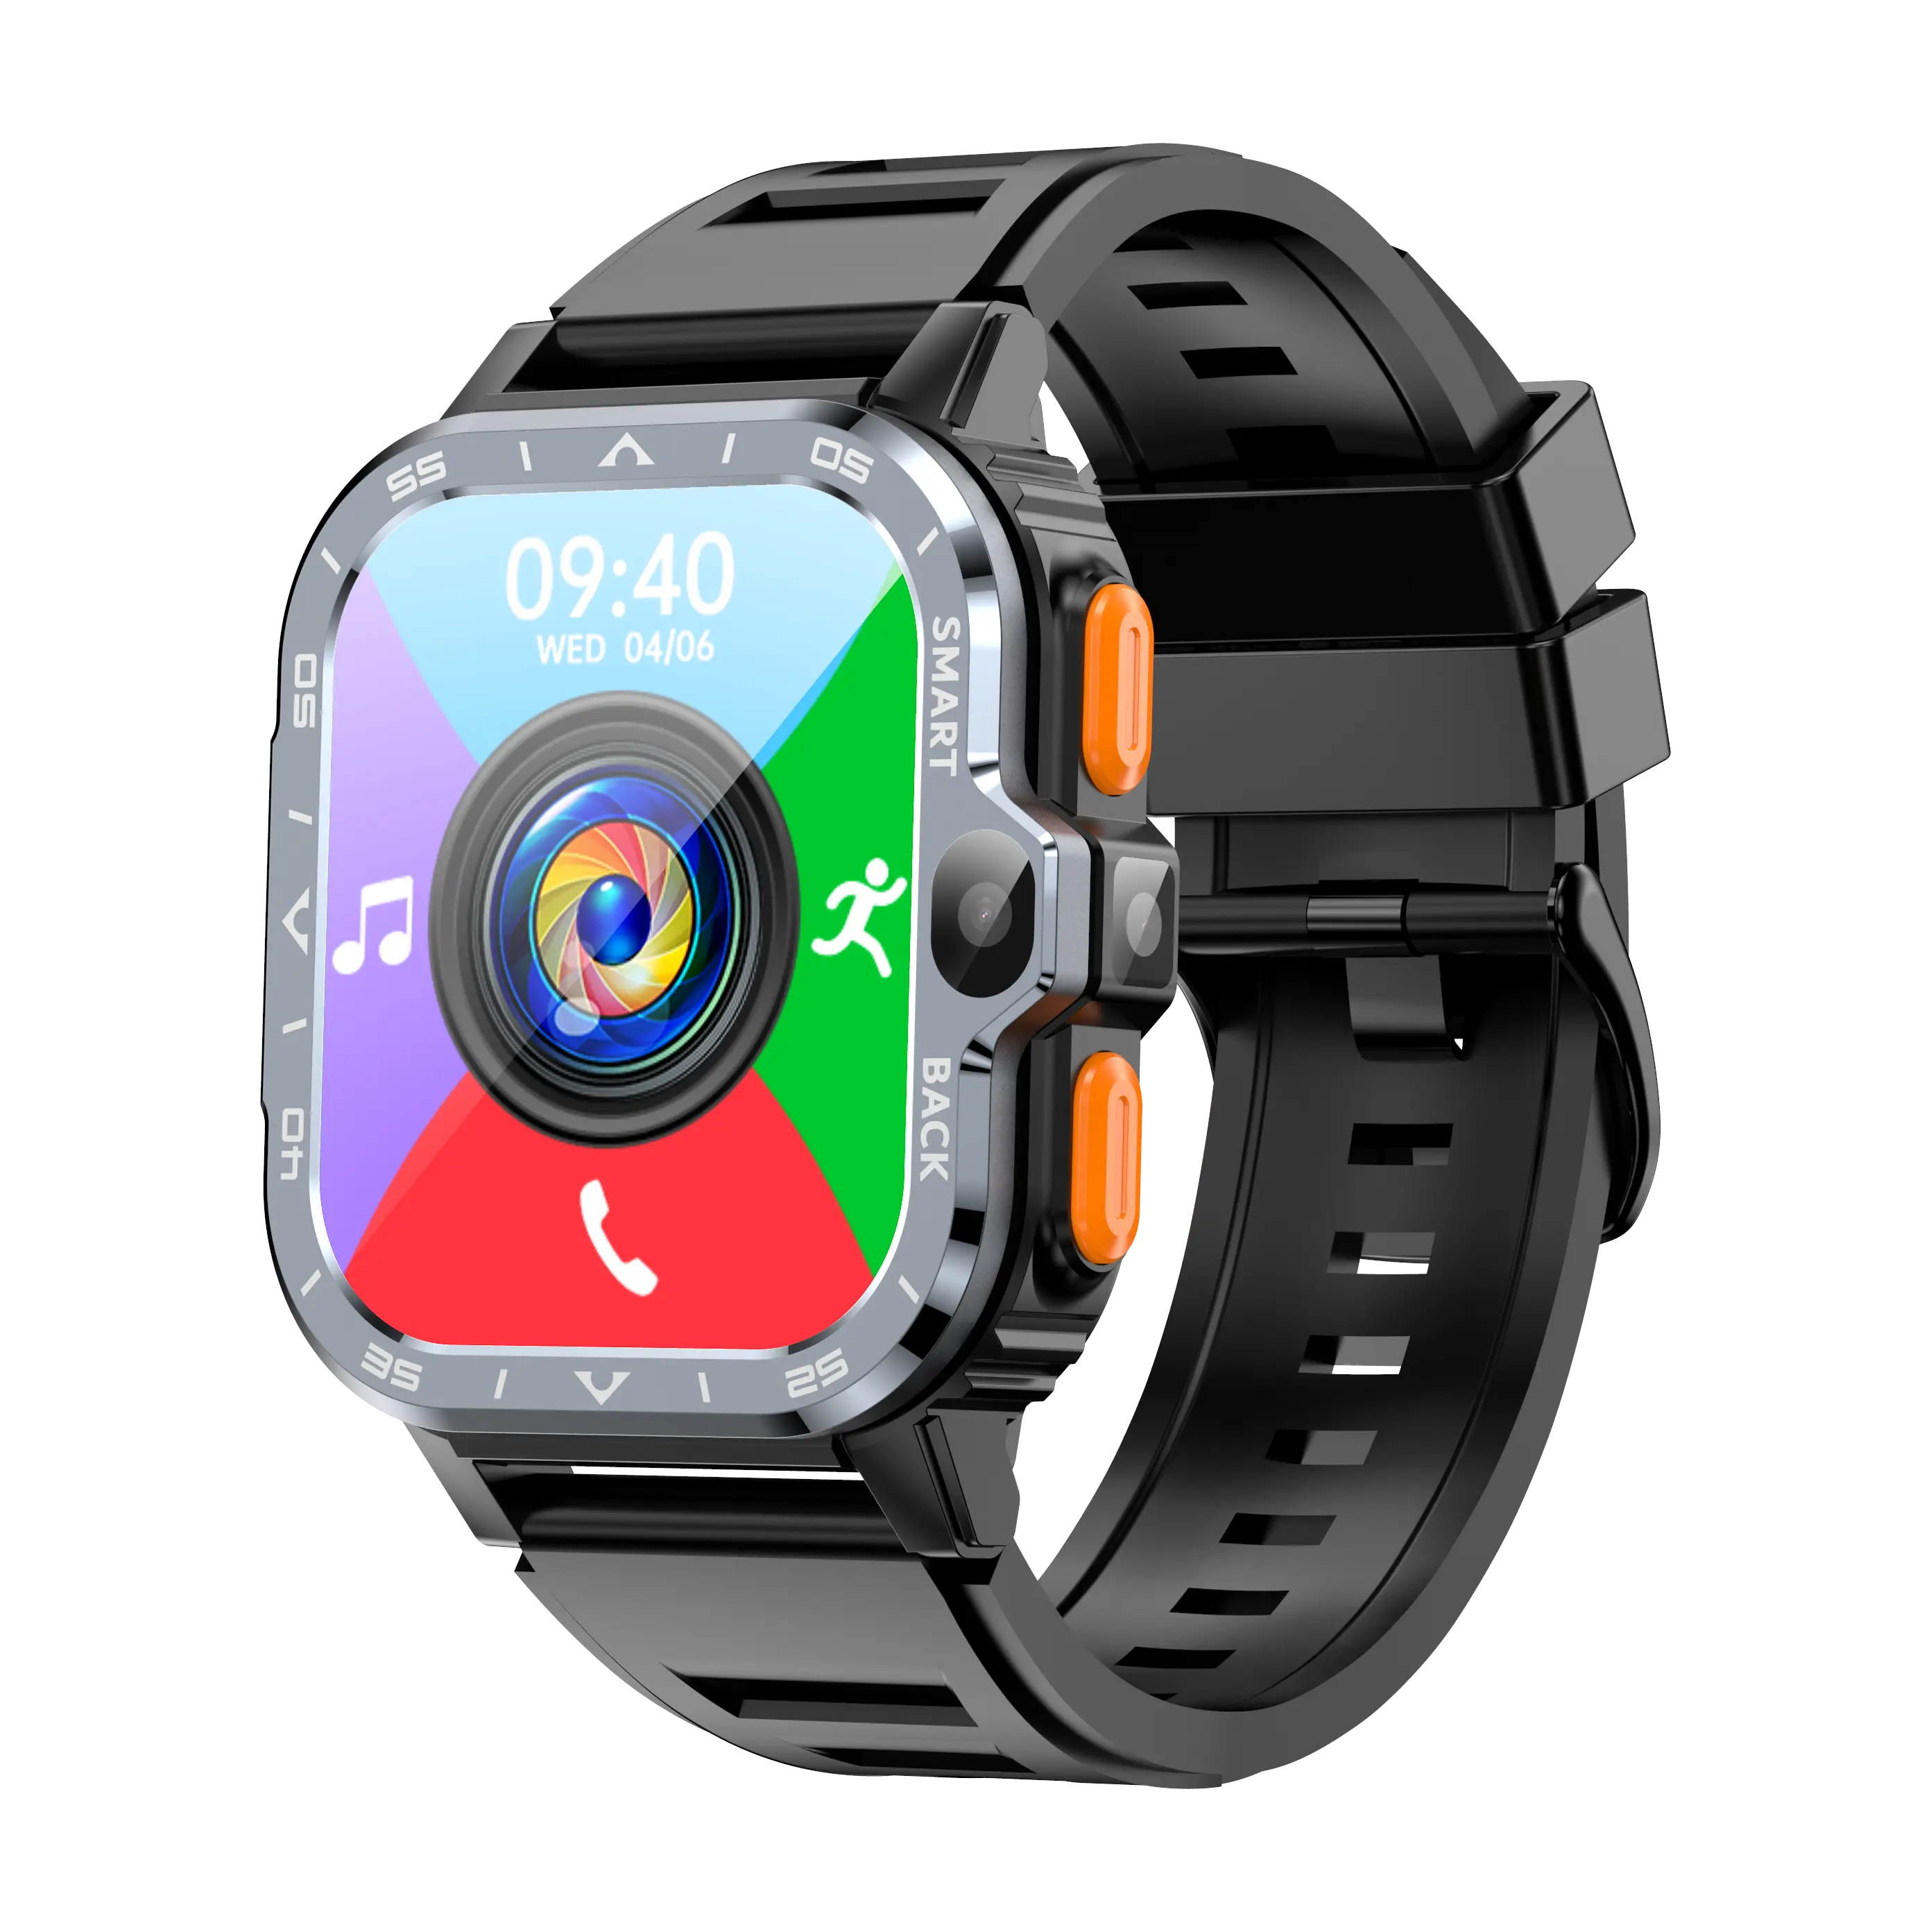 4g איכות העליון החדש 2g + 16g טלפון נייד שעון חכם מסך מגע אנדרואיד שעון חכם עם קצב ניטור קצב לב sq333